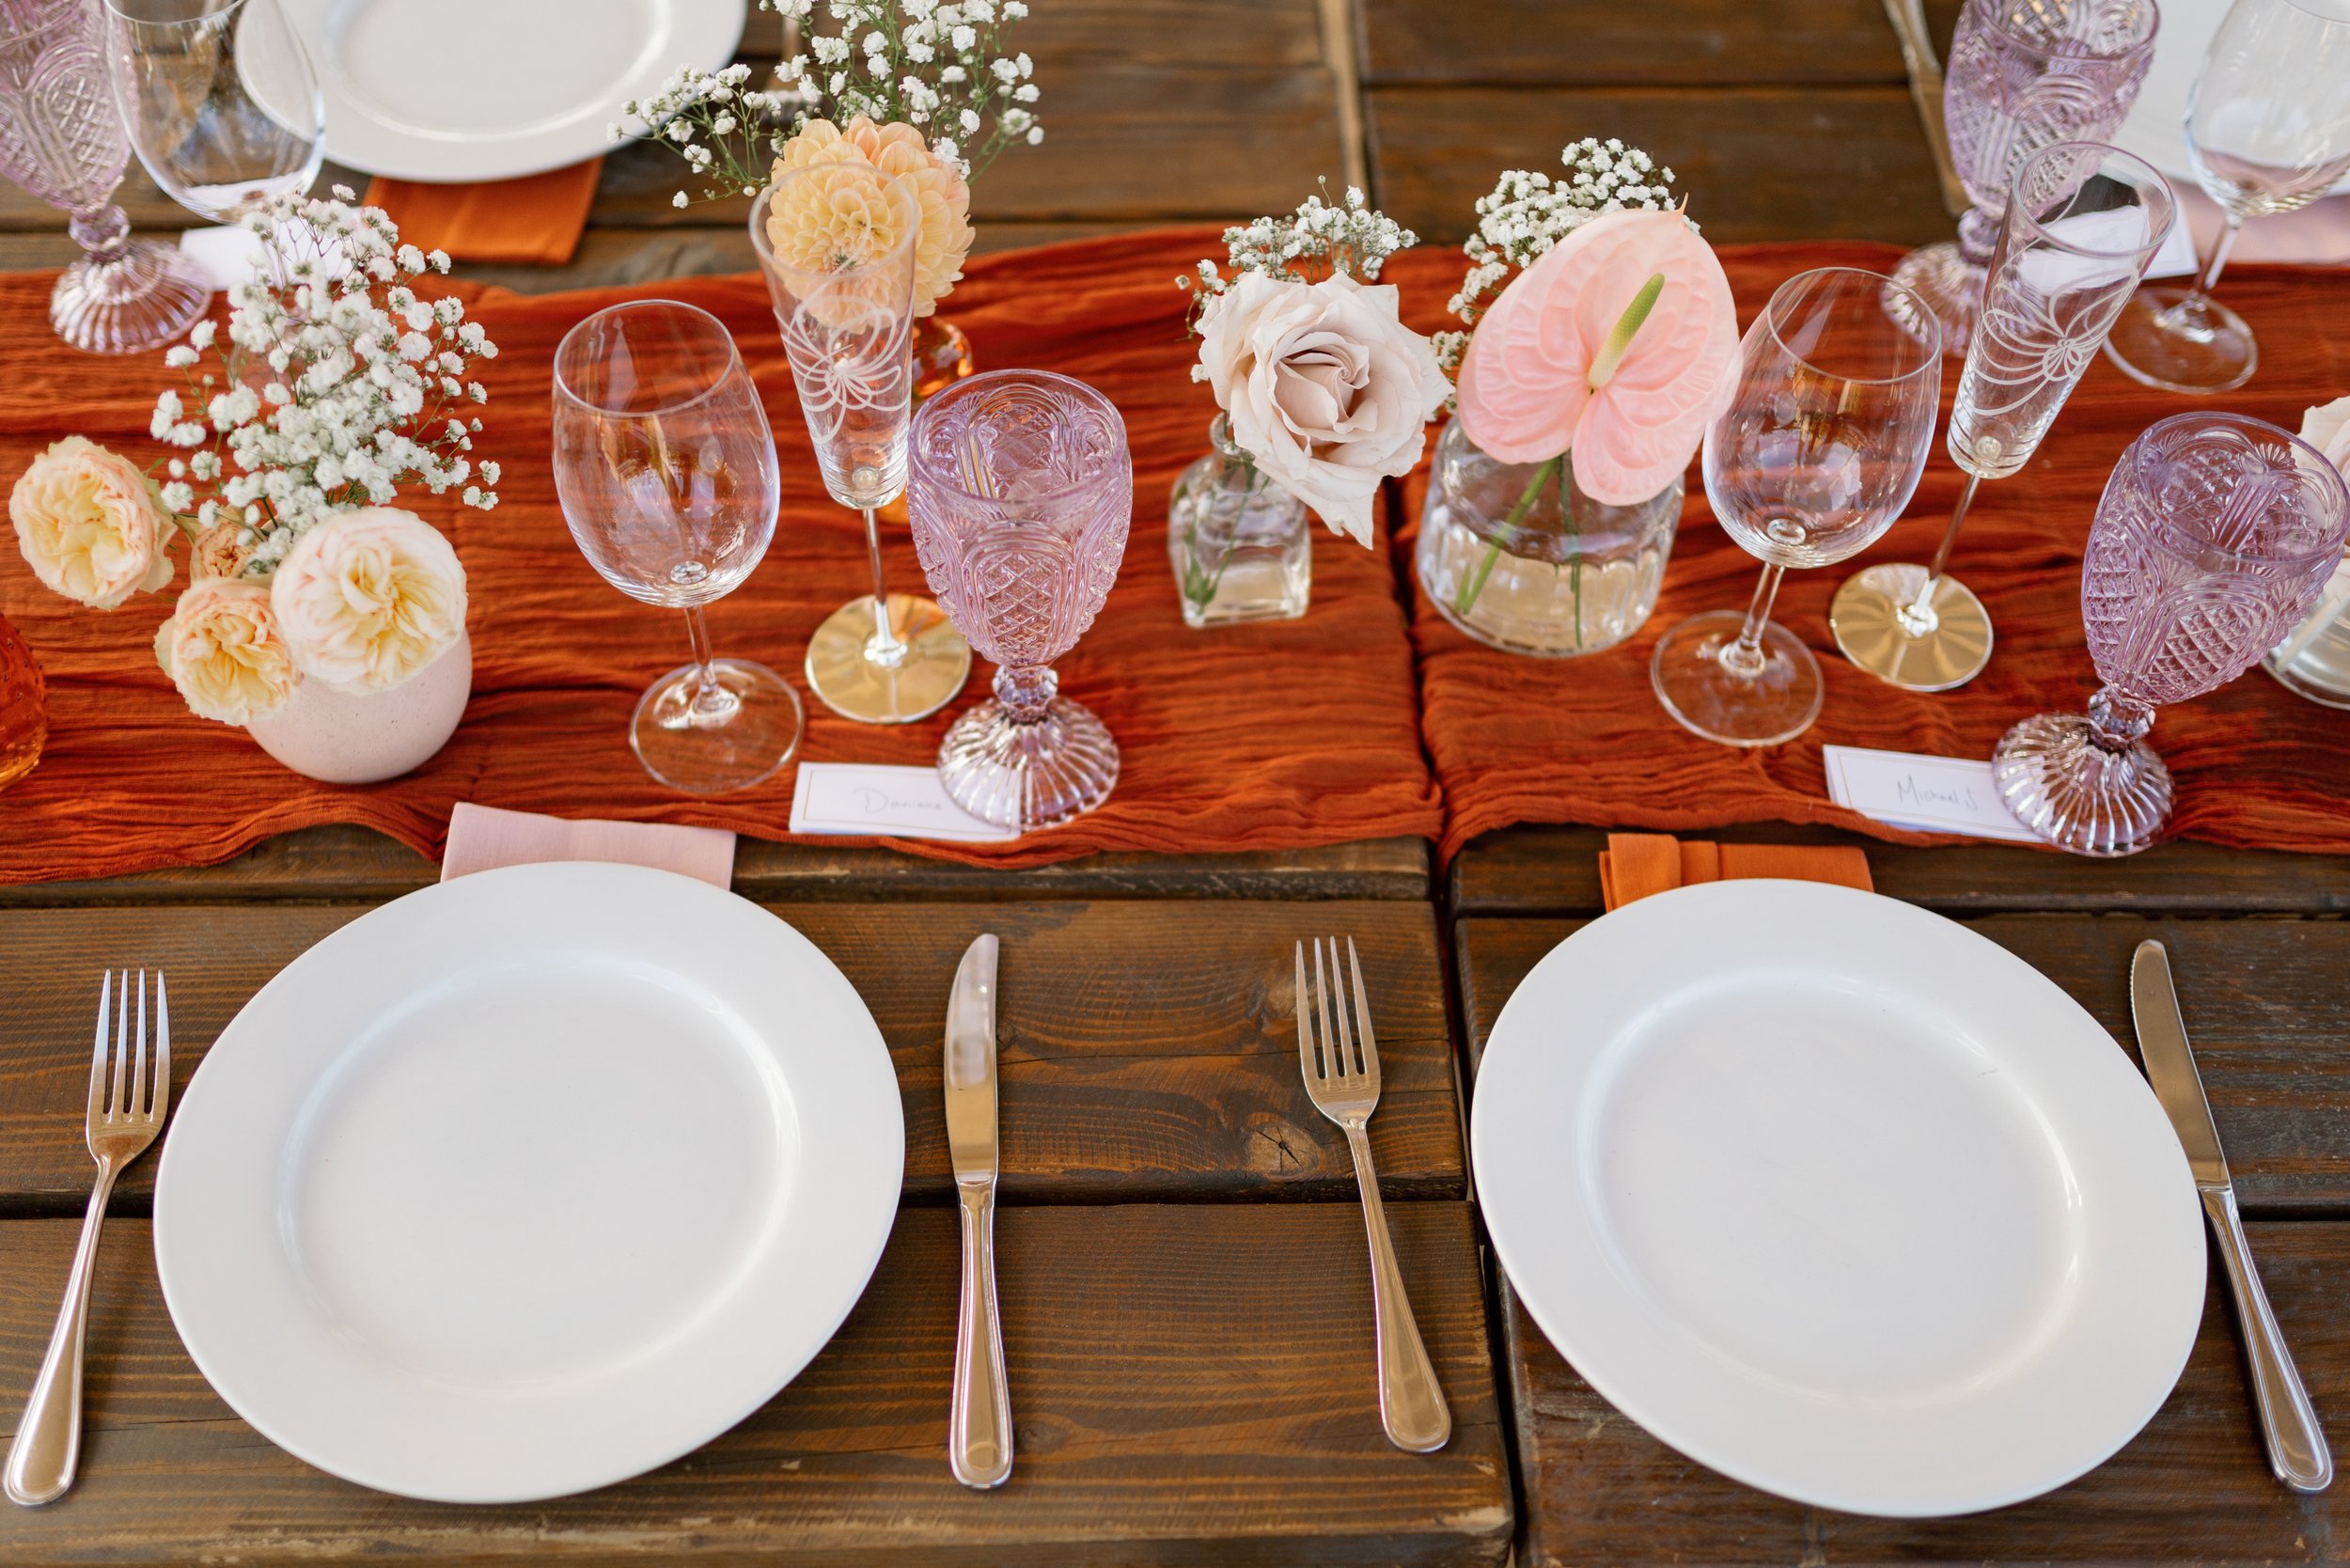 www.santabarbarawedding.com | Augusta Ottillia Photography | Megan Rose Events | Fallen Oaks Estate | Brooke Edelman | All About Events | Torricella Catering | Reception Table Set Up